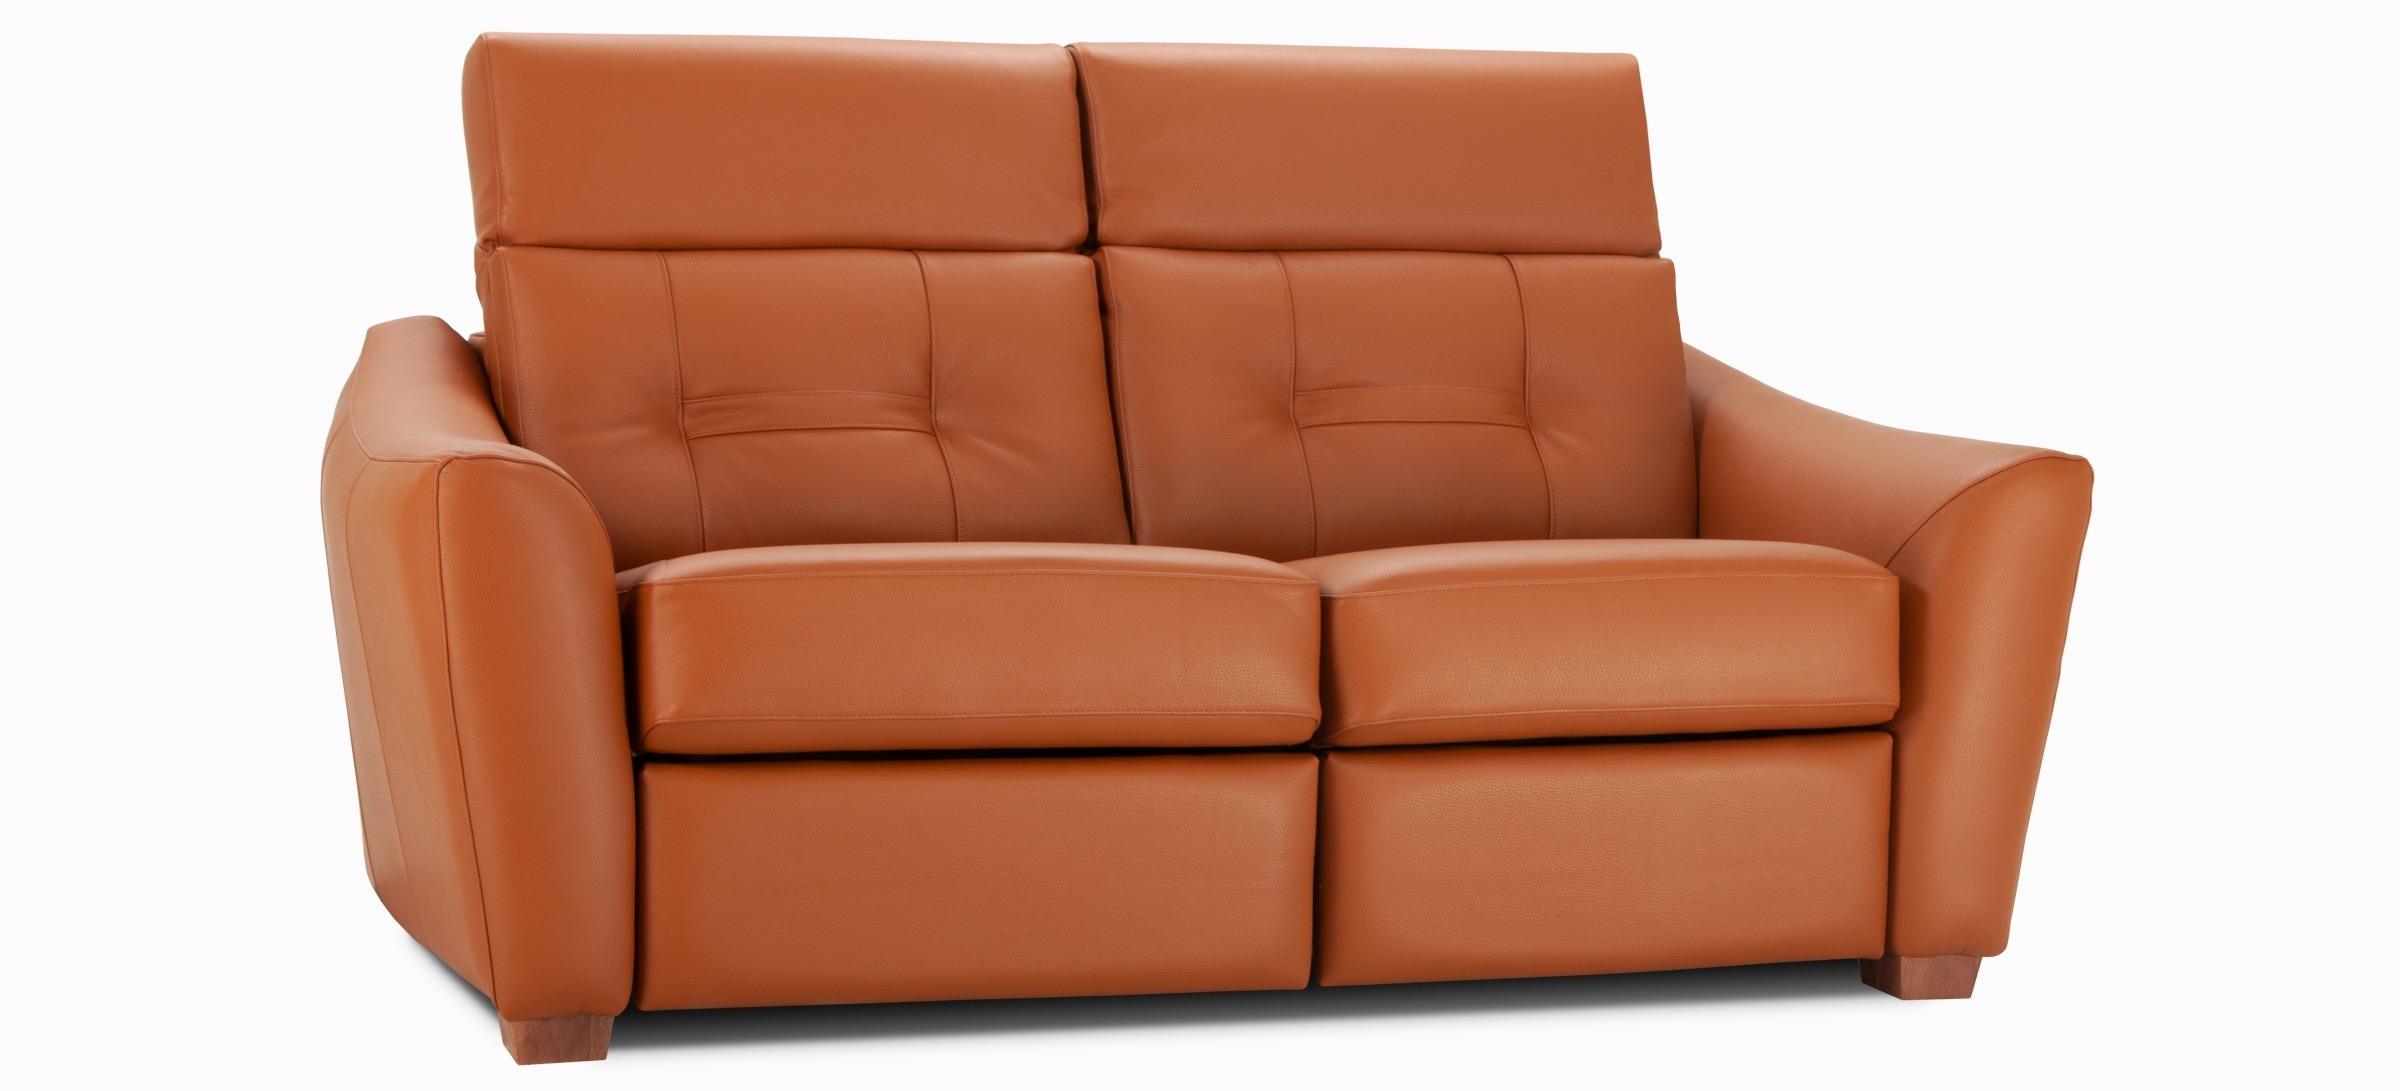 Clario sofa apt cinnamon side1